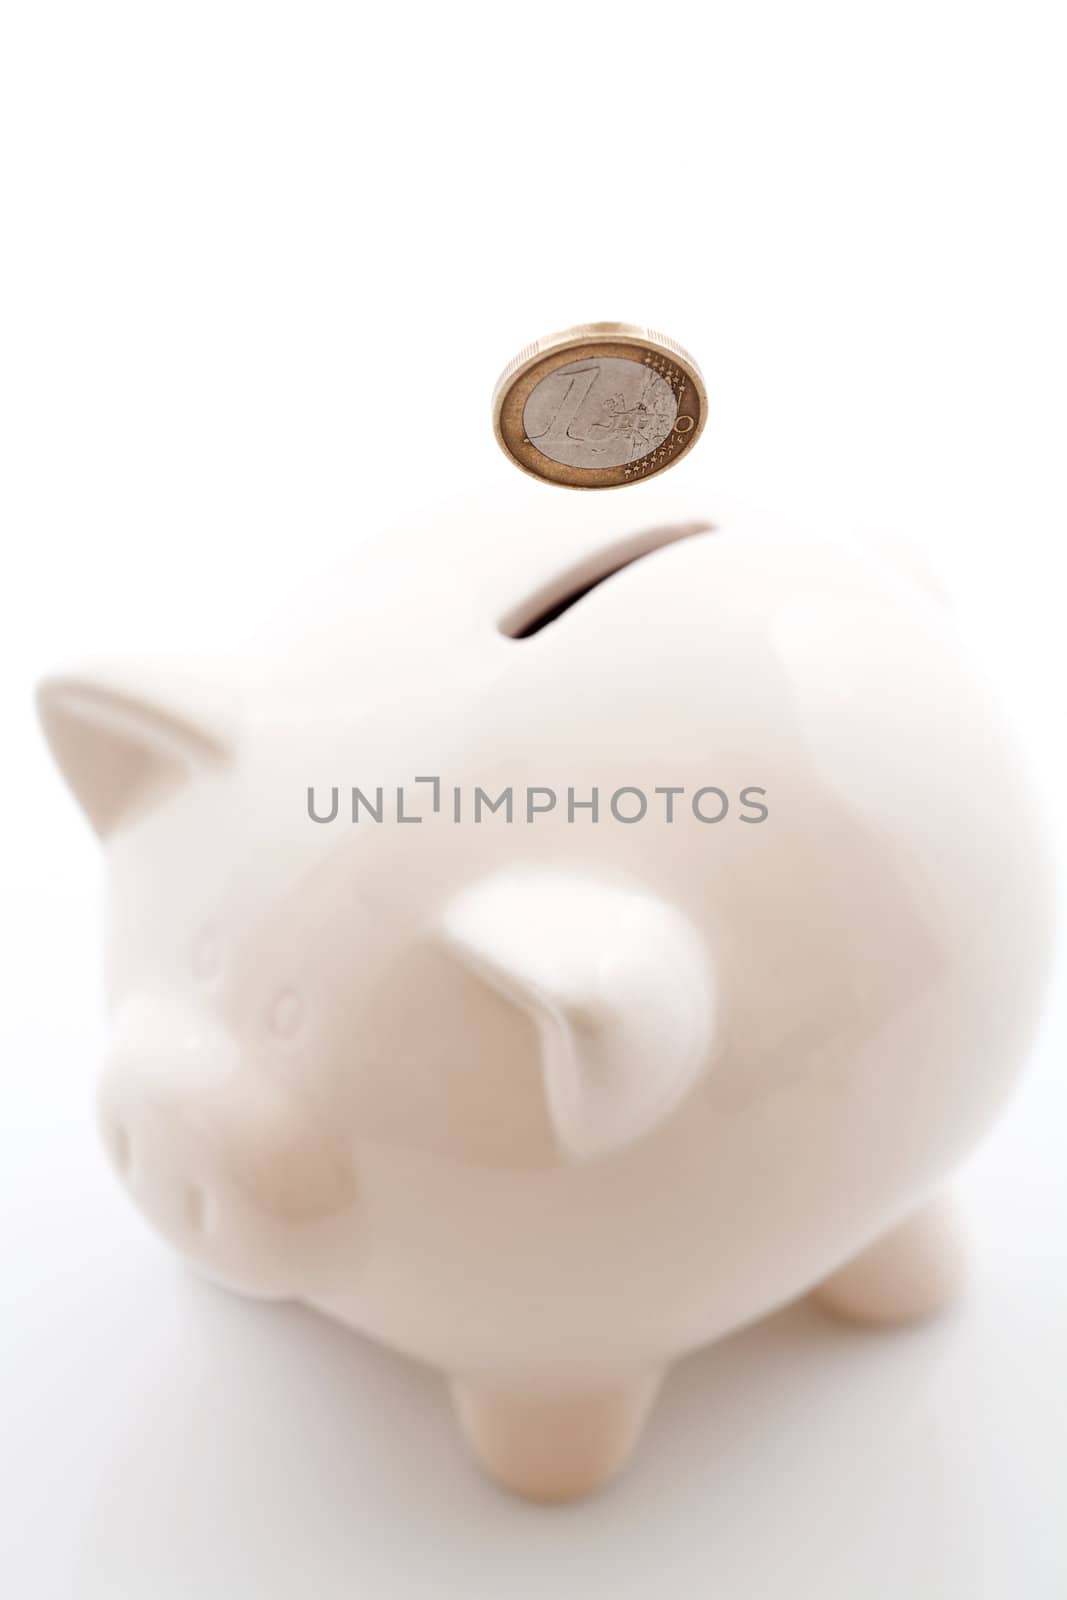 Piggy bank money box. Money (euro) is falling through piggy bank